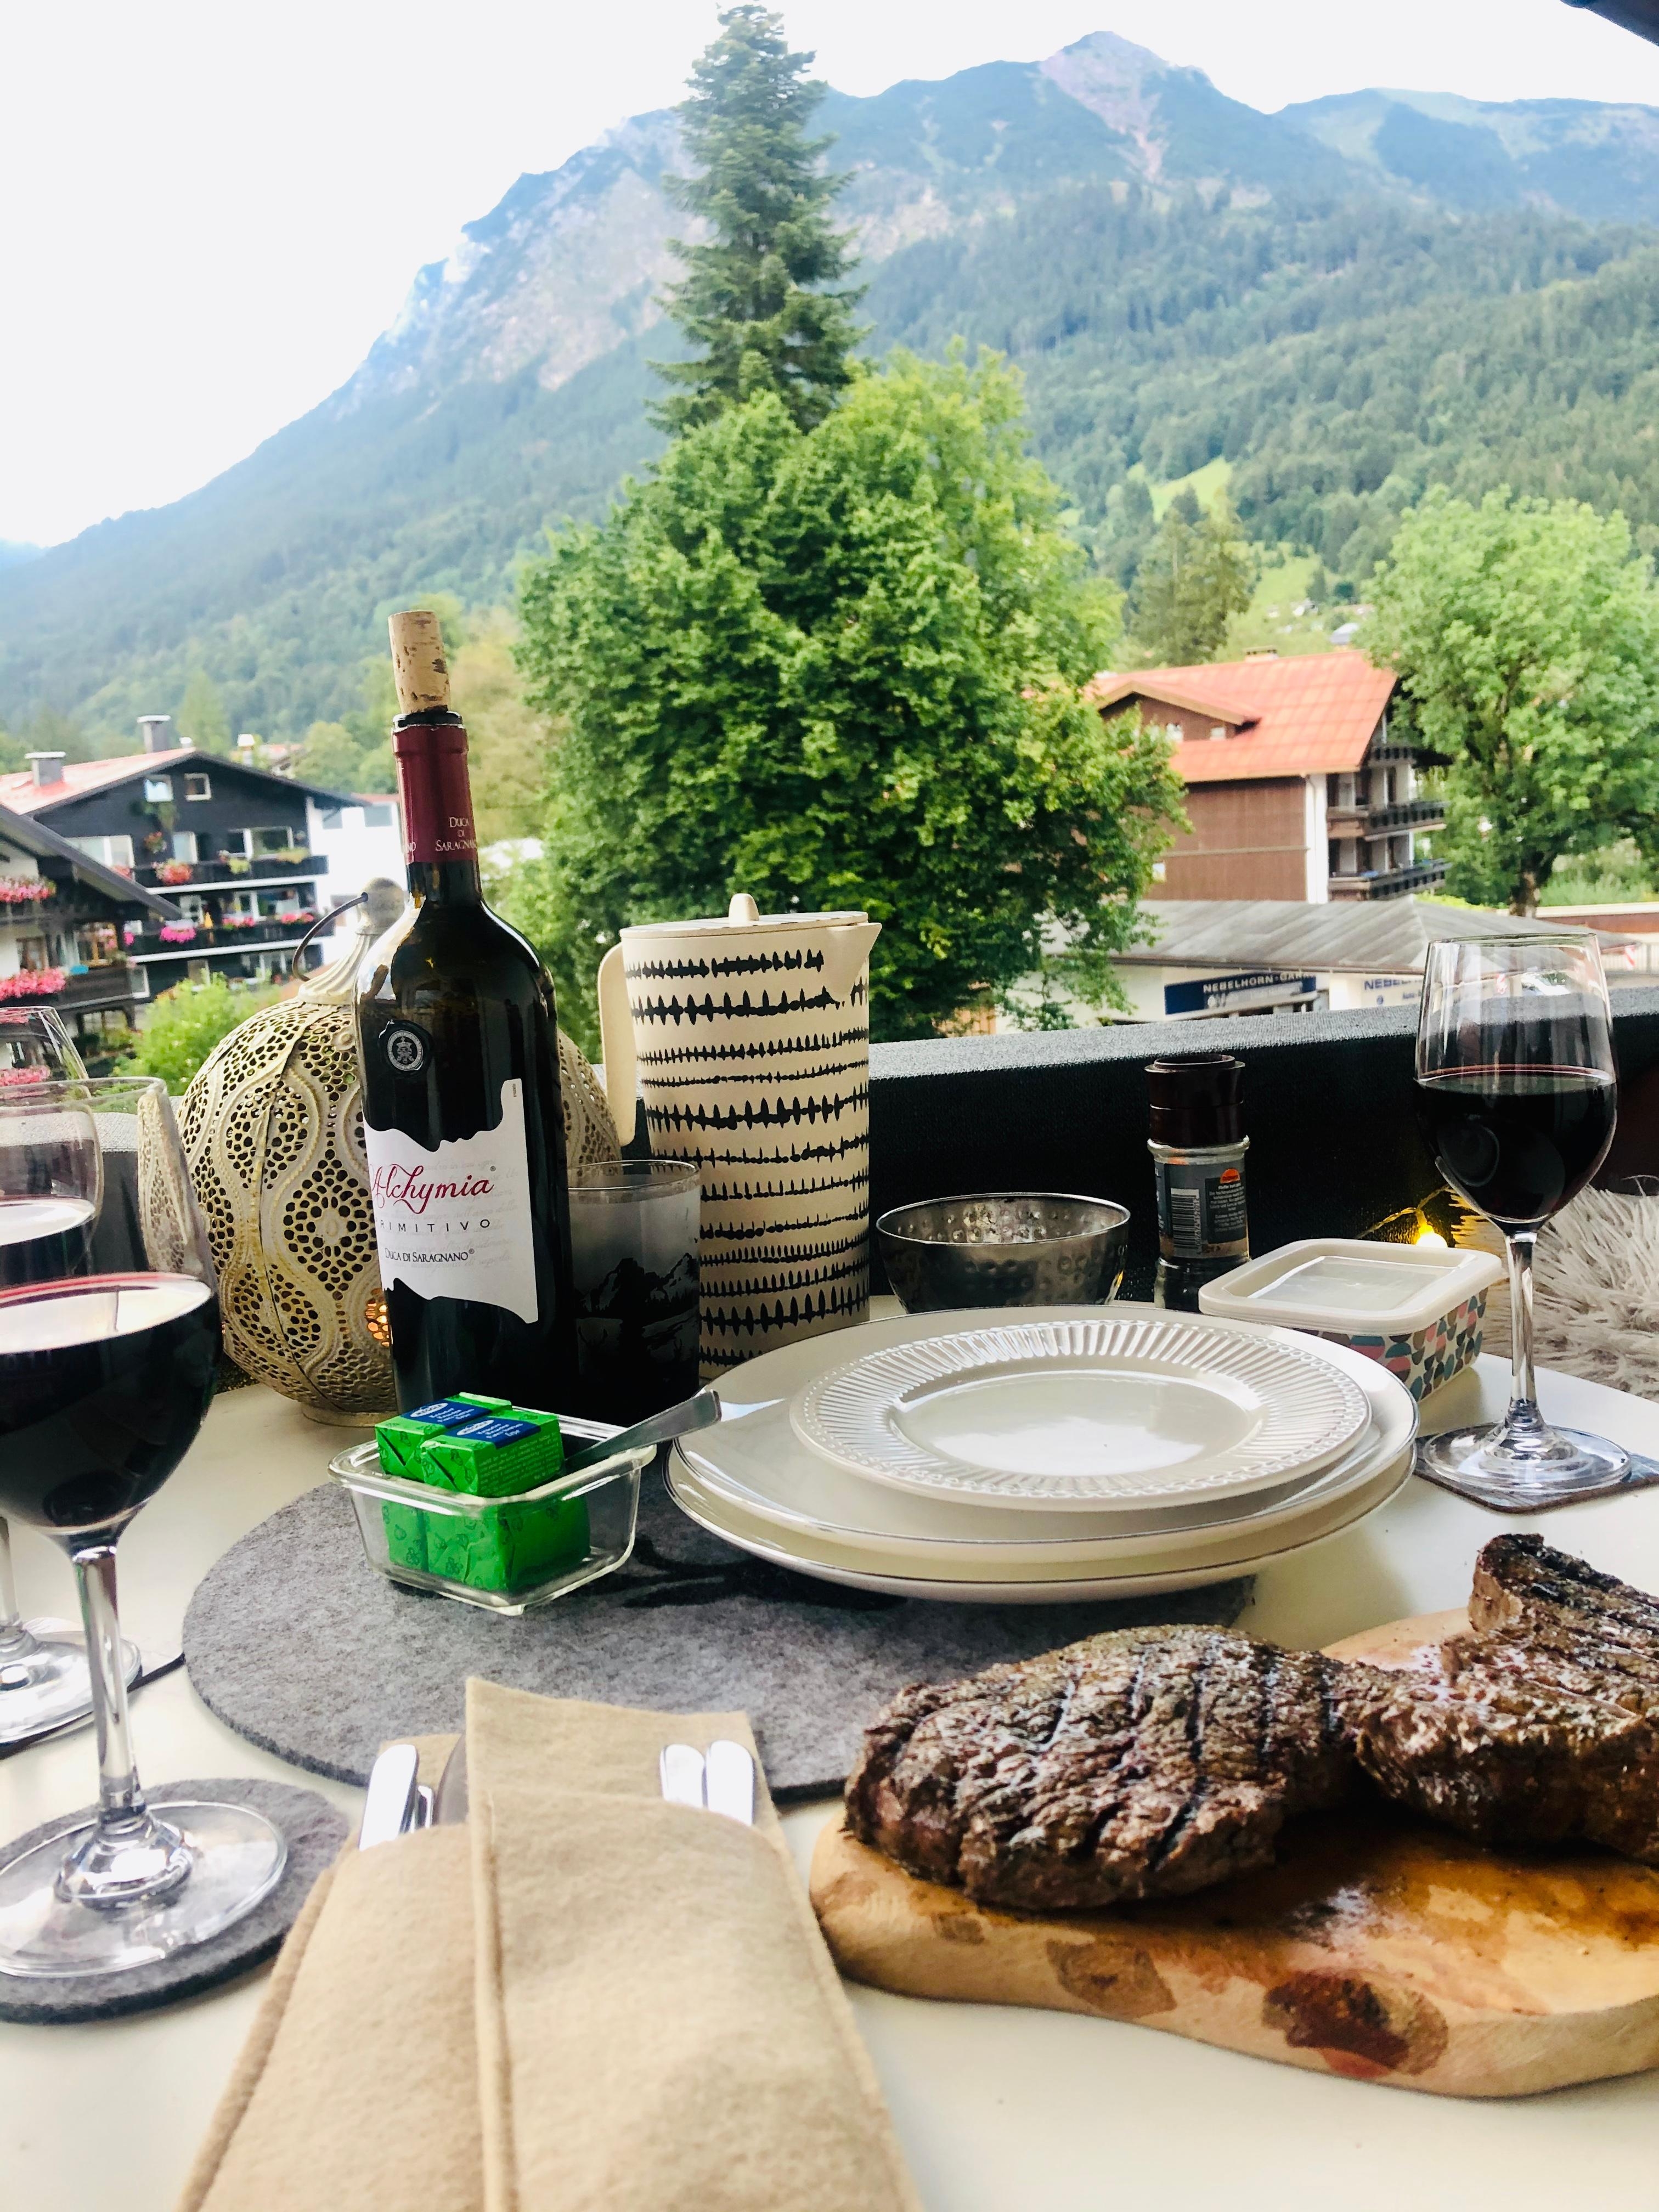 #grillabend #athome #zuhause #steak #redwine #mountainview